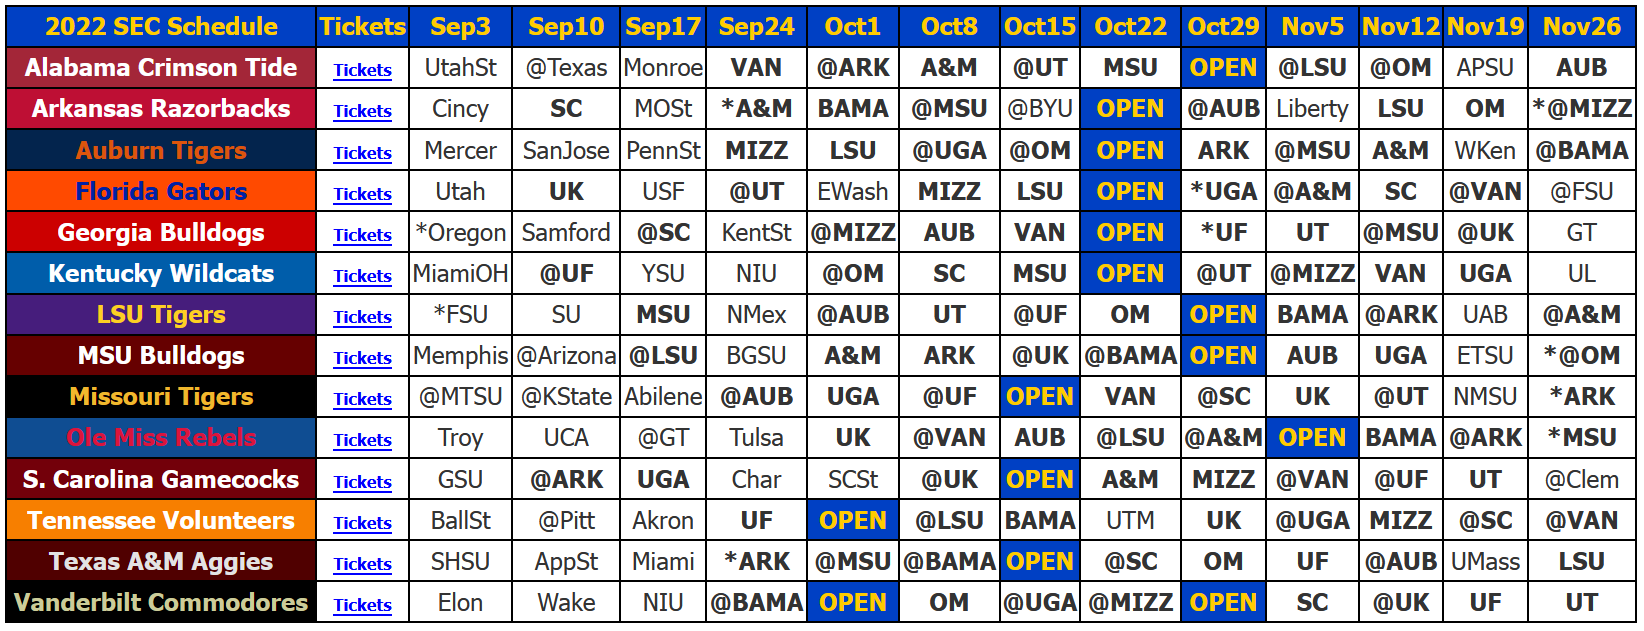 2022 SEC Football Schedule Grid